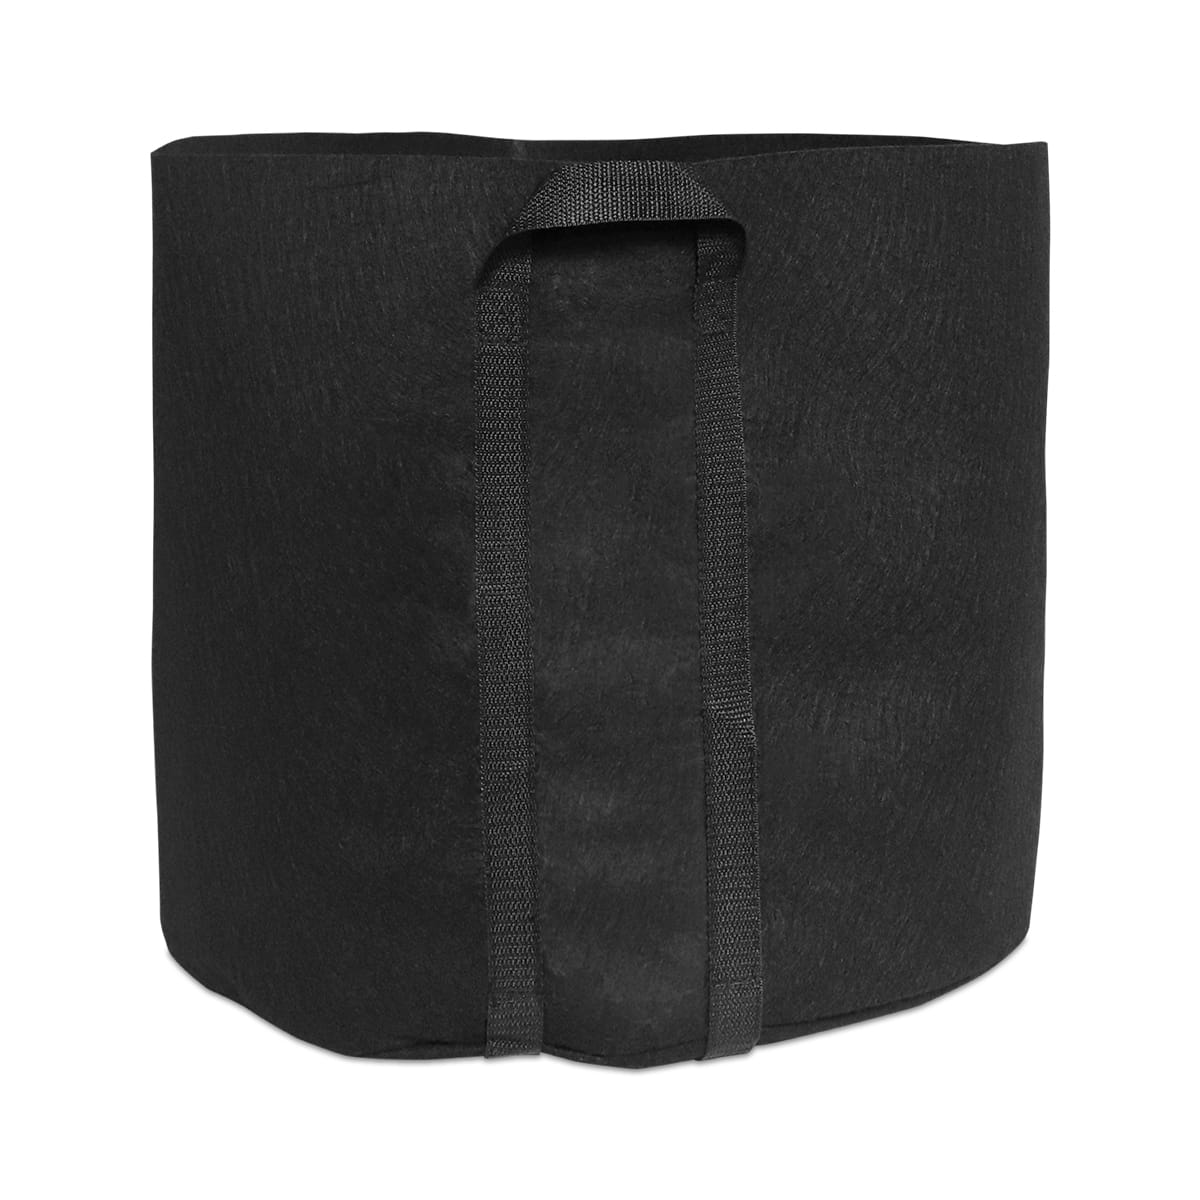 Phat Sack Black 15 Gallon Fabric Pot Heavy Duty